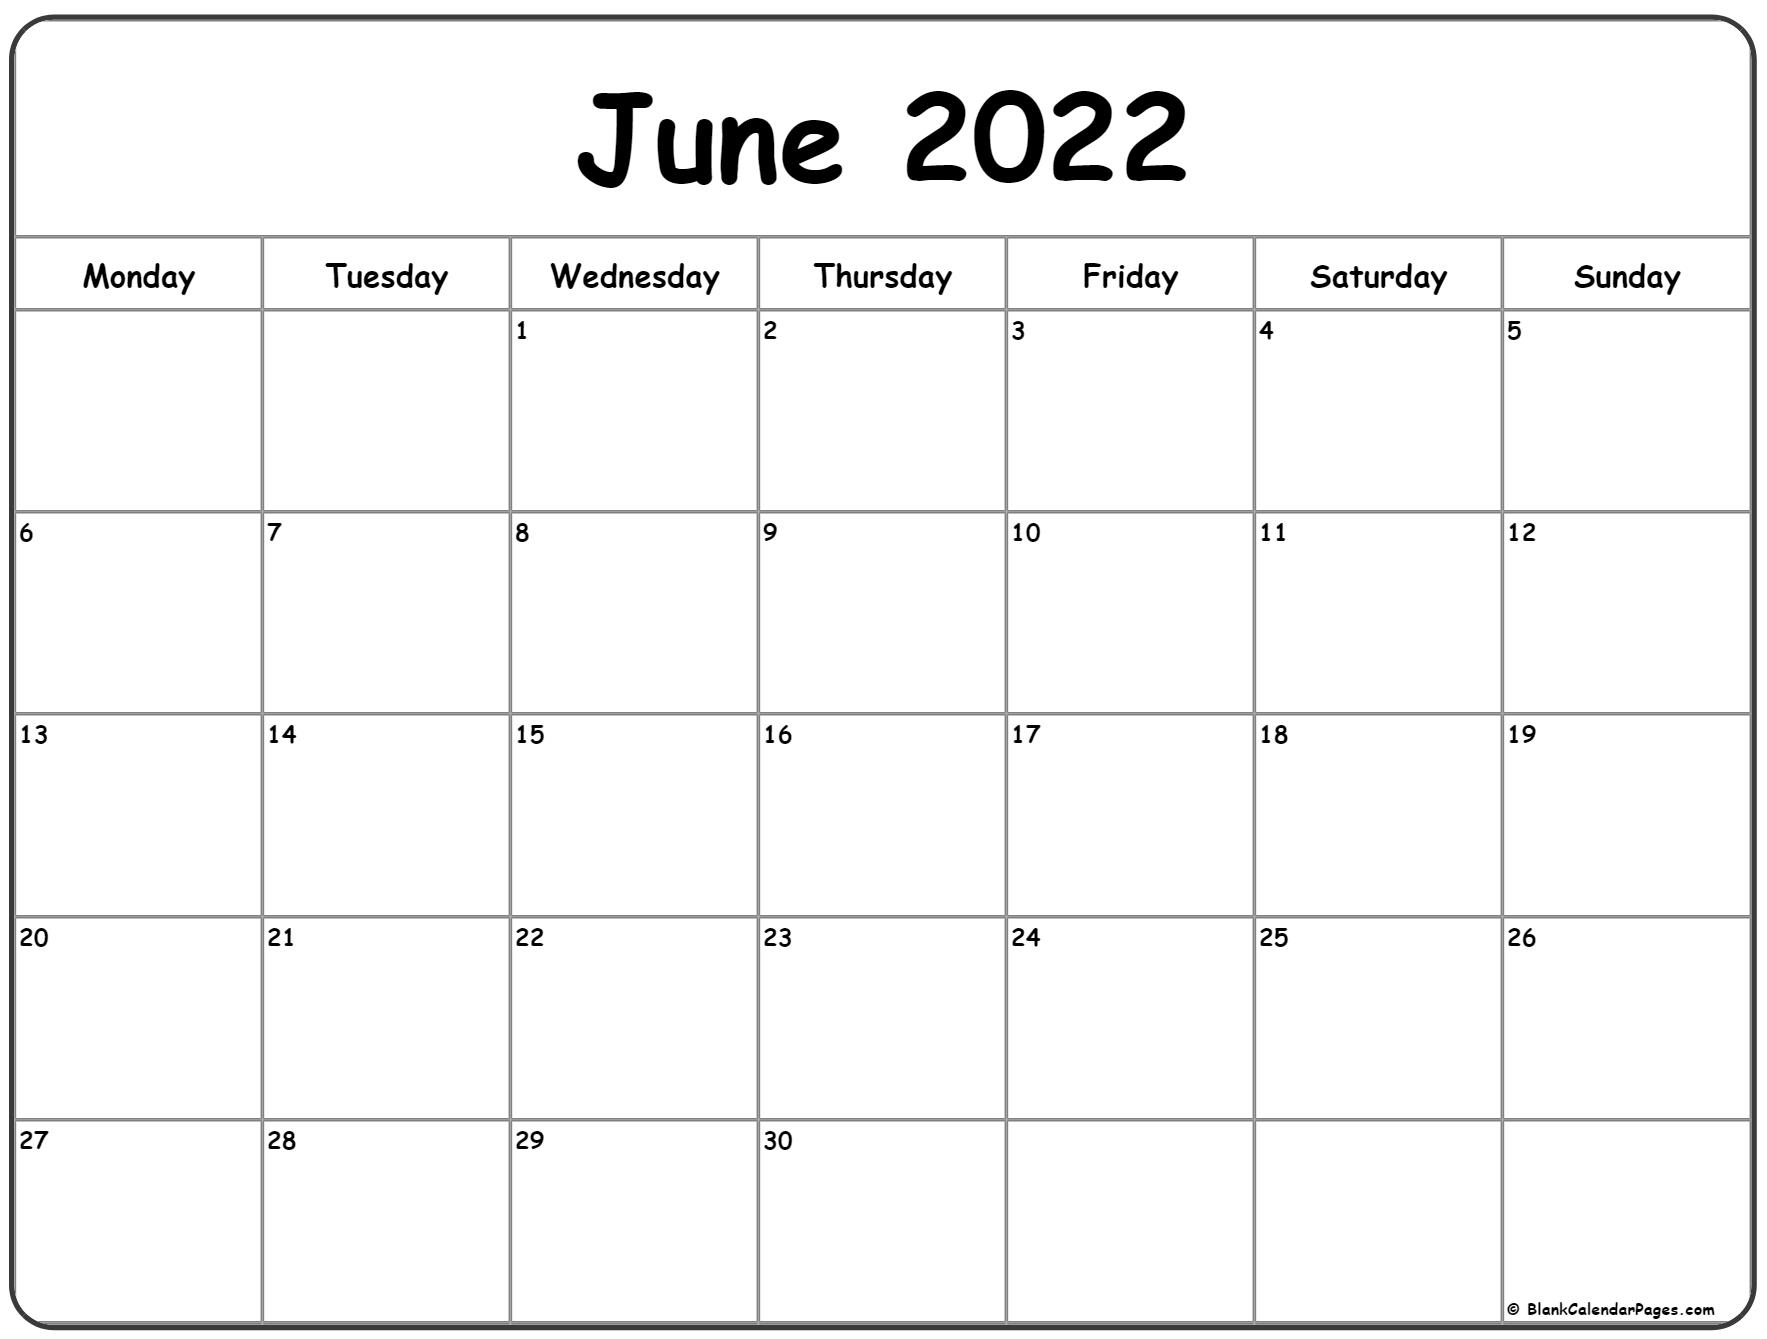 June 2022 Monday Calendar | Monday To Sunday